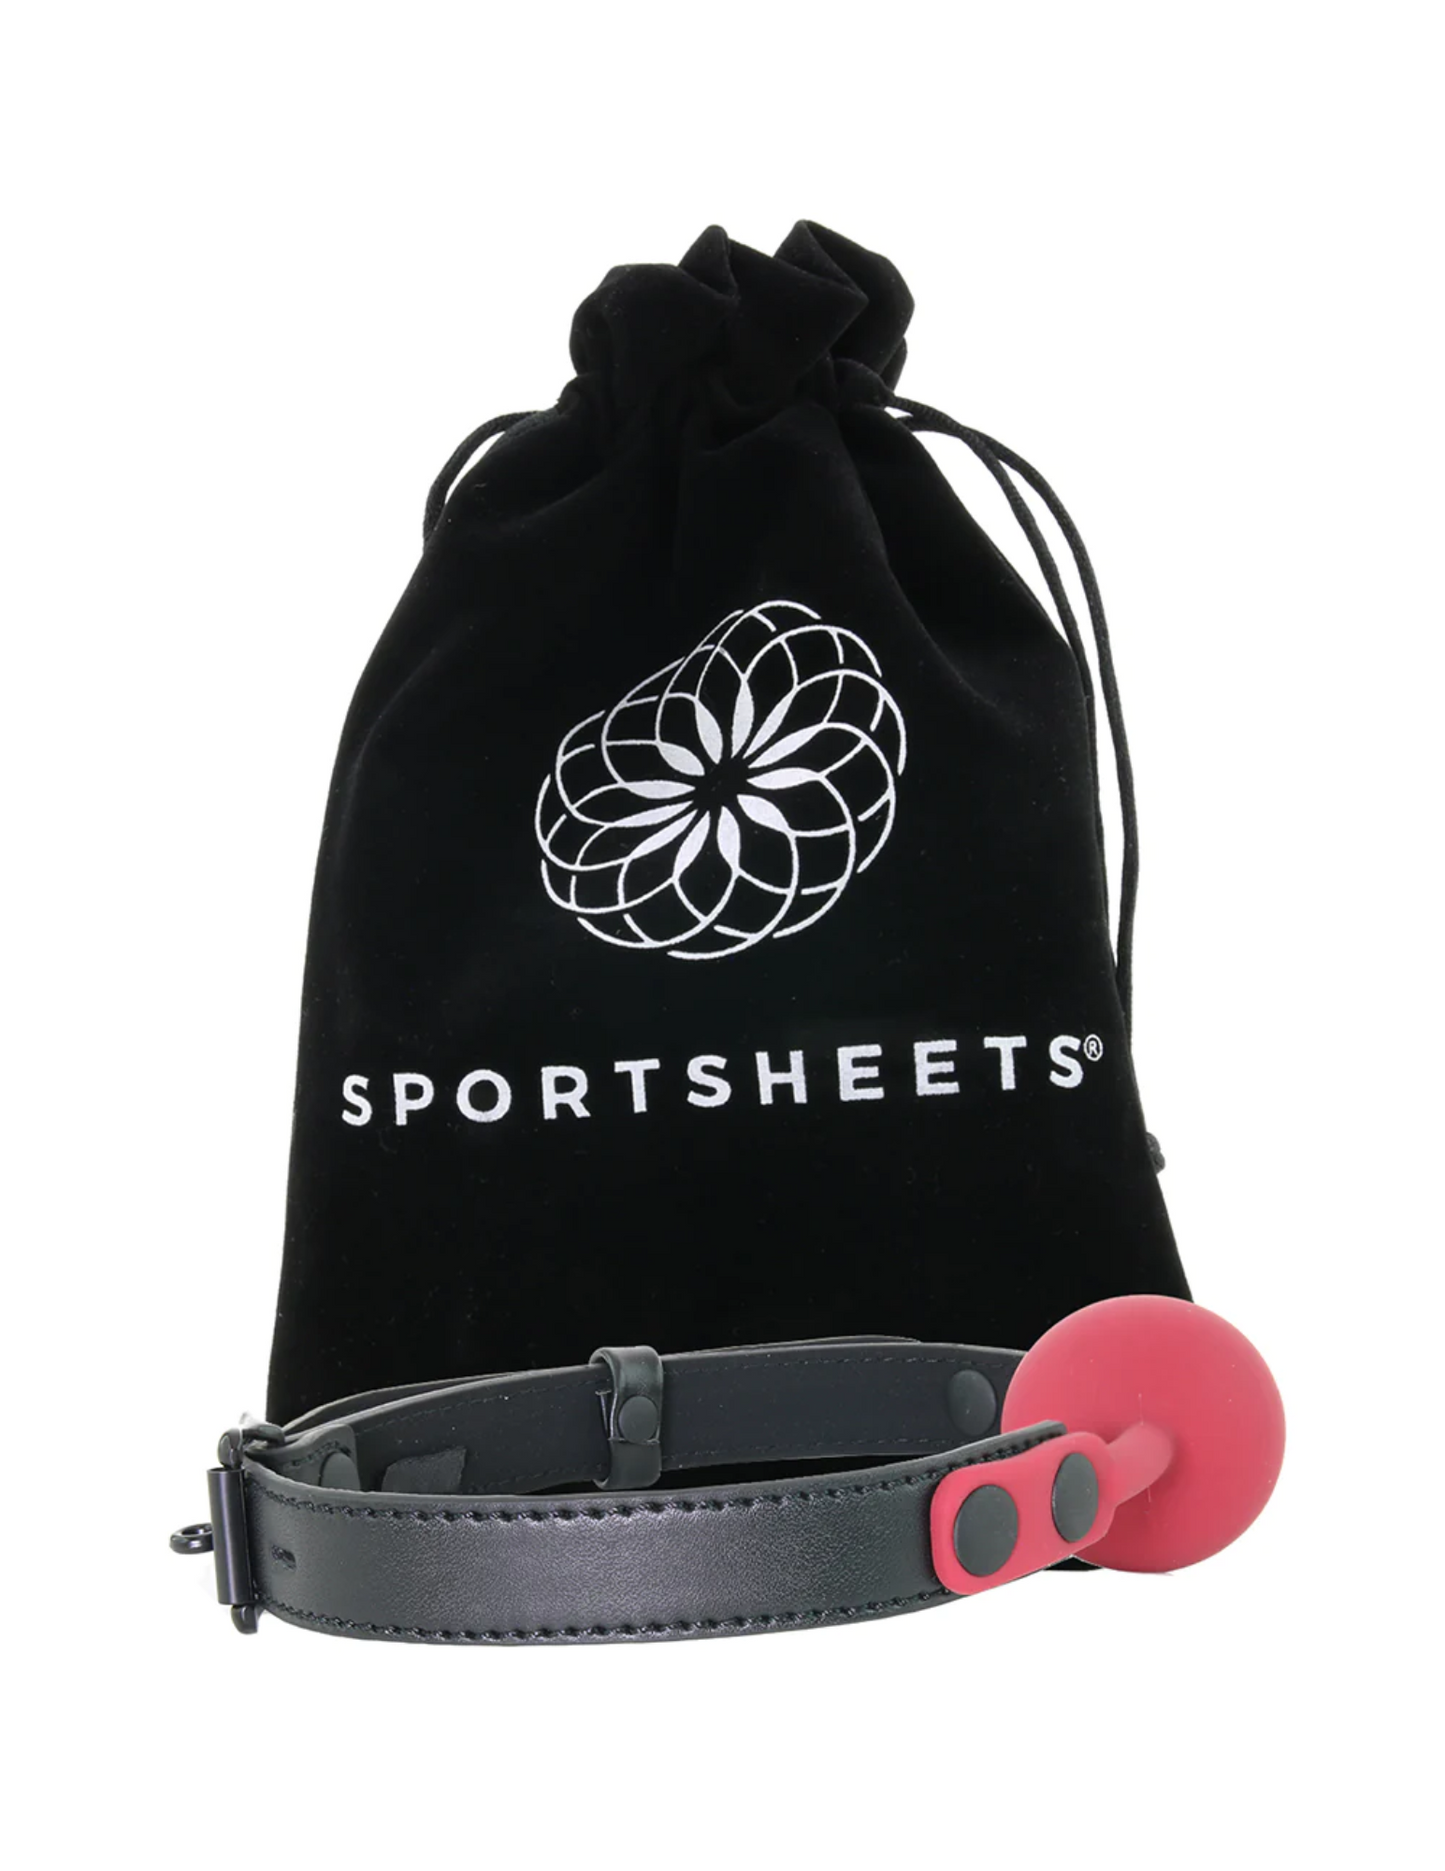 Photo of the Sportsheets Saffron - Ball Gag and its velvet storage bag.